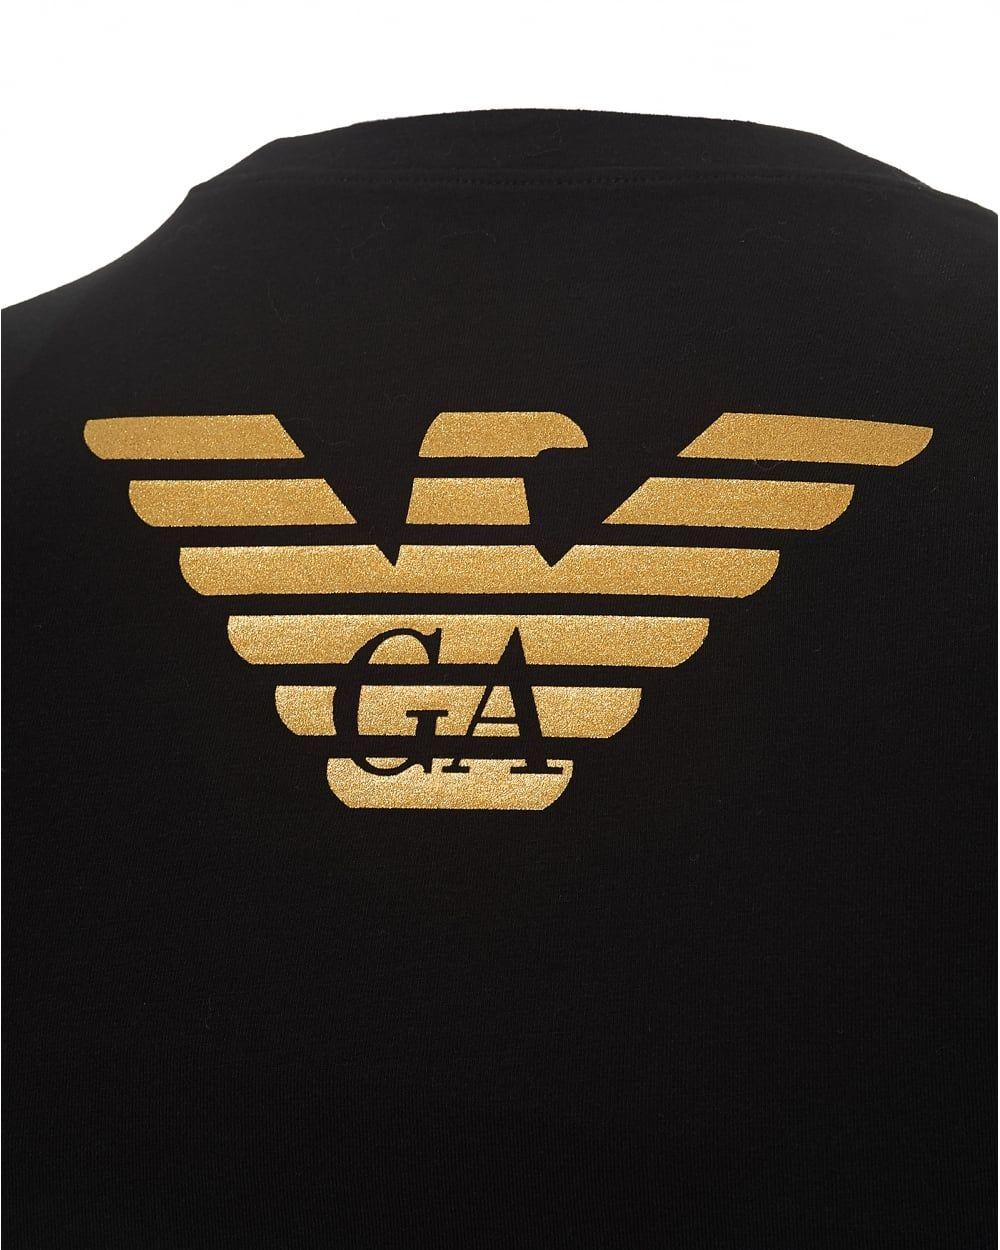 Emporio Armani Logo - Emporio Armani Mens Metal Eagle T Shirt, Large Back Logo Black Tee